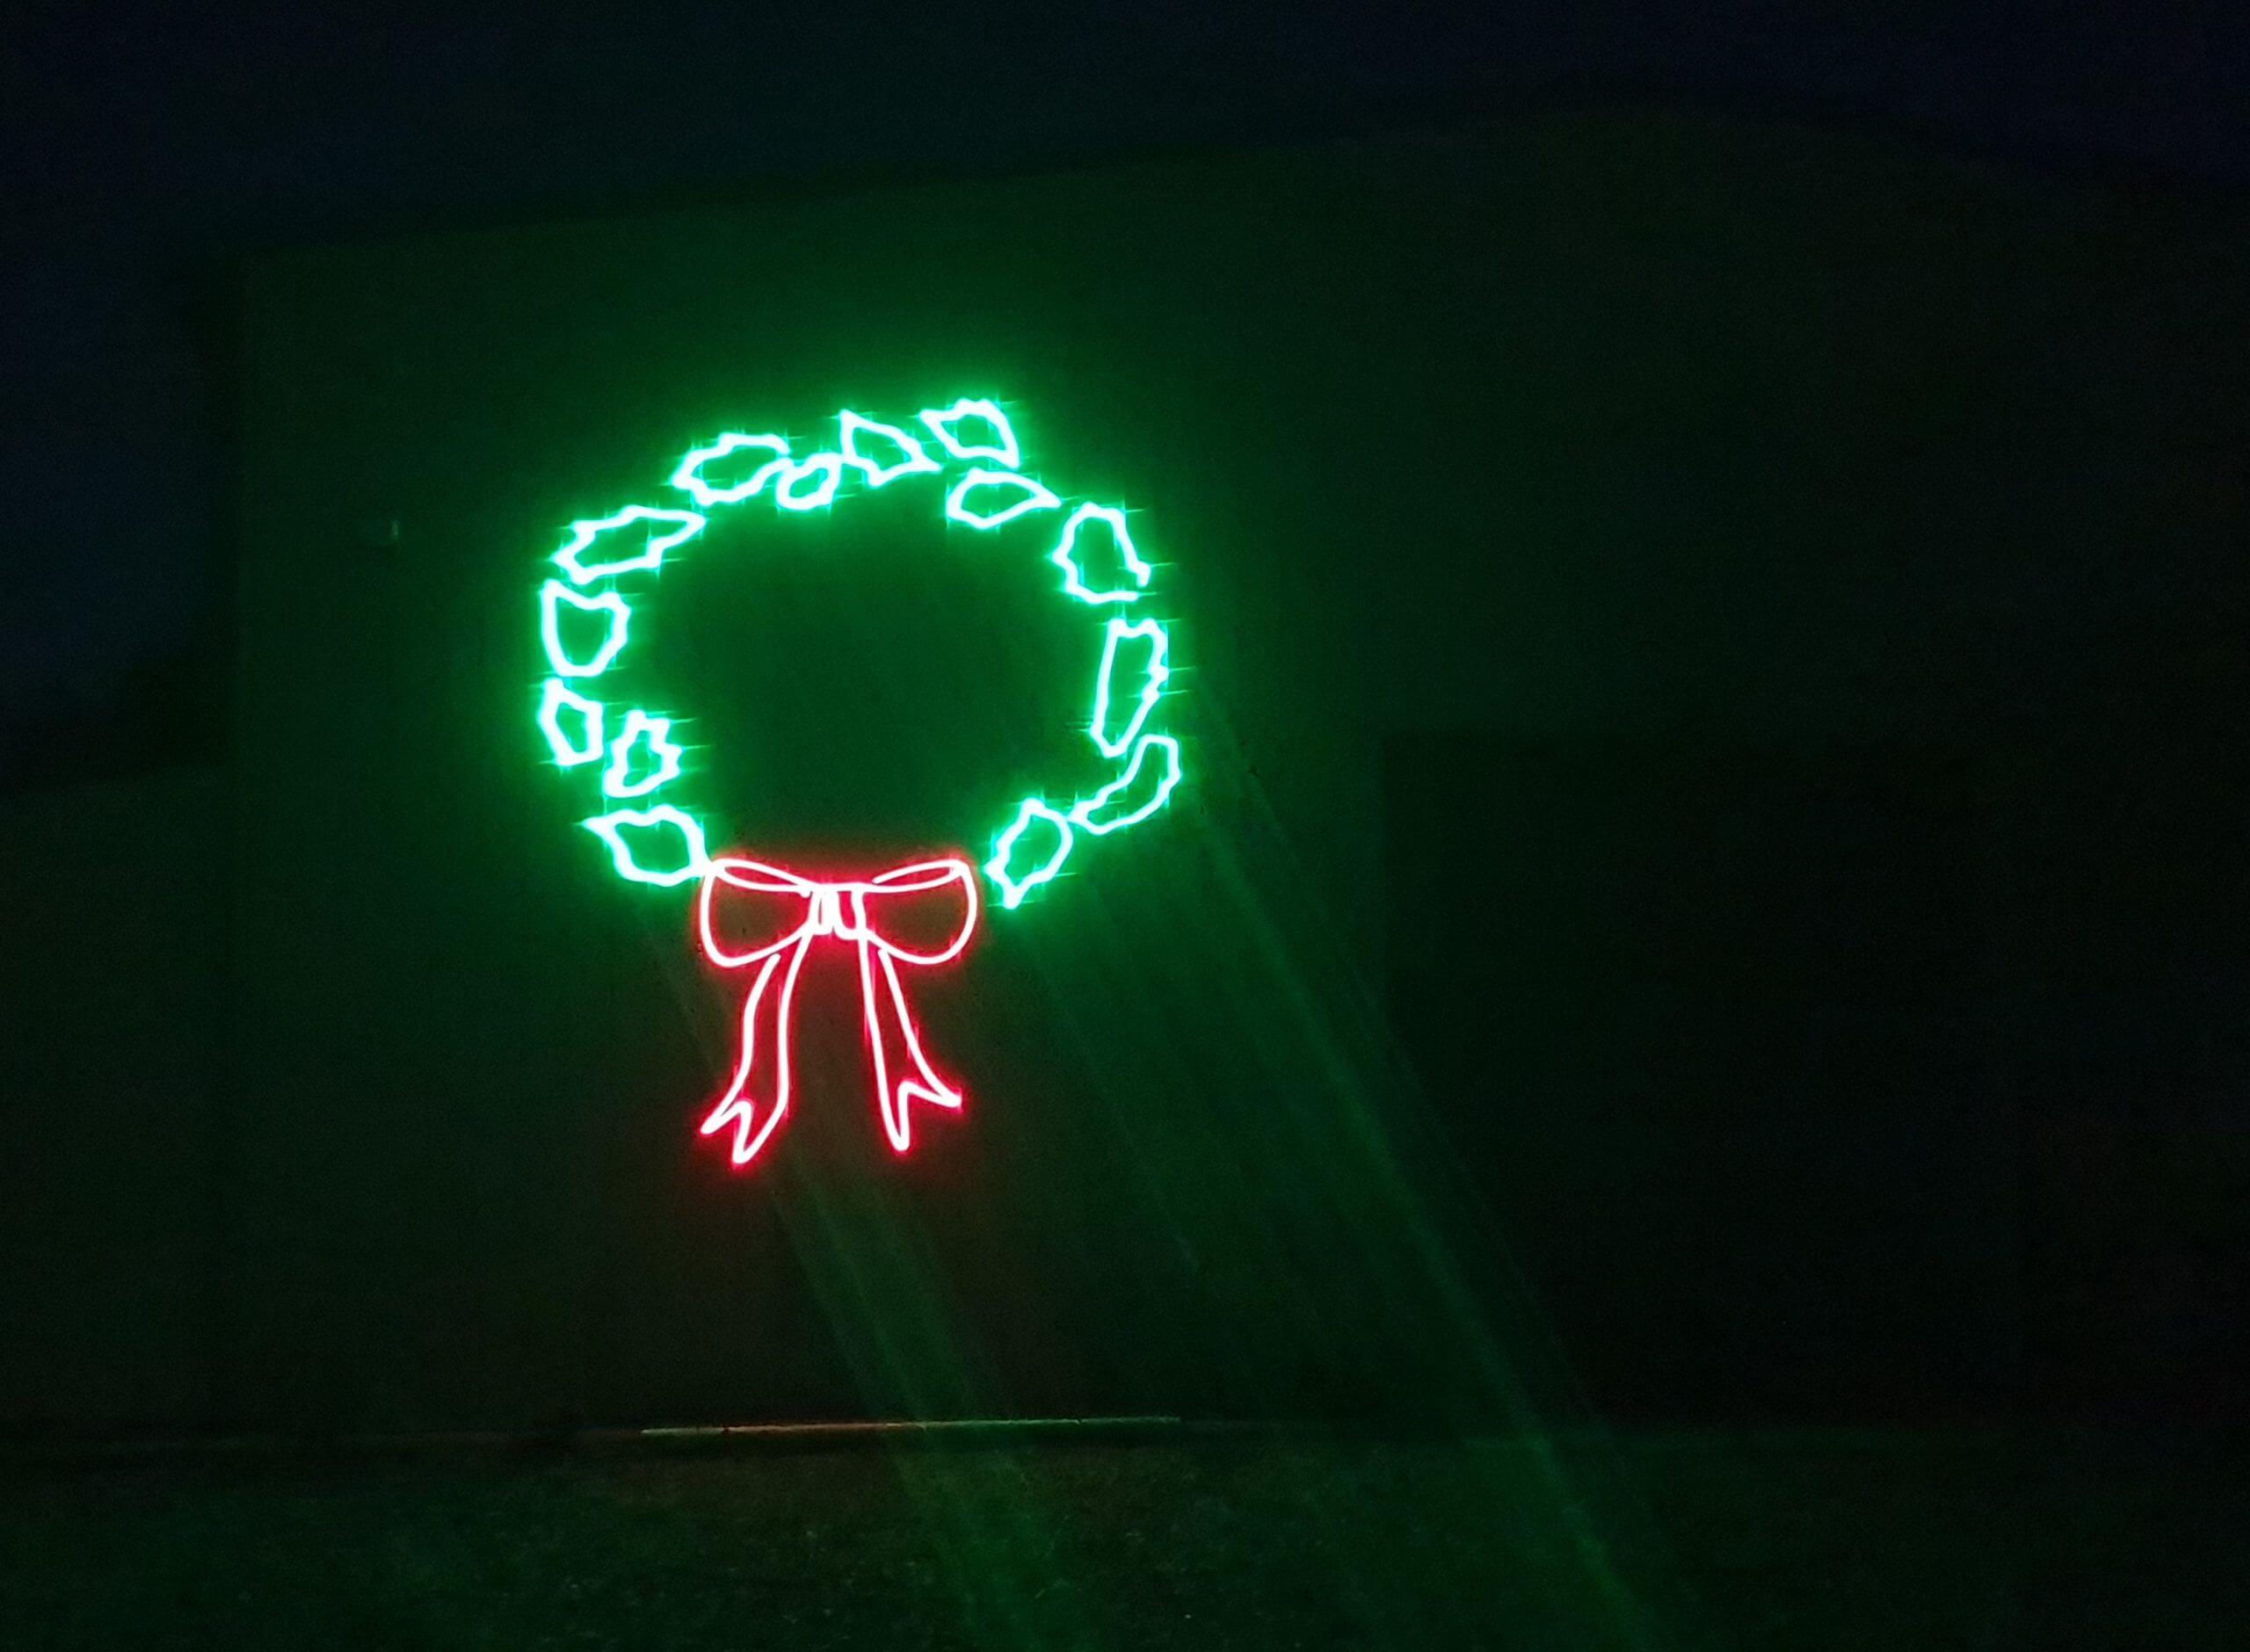 Europe Évènement - Laser projection of a Christmas wreath